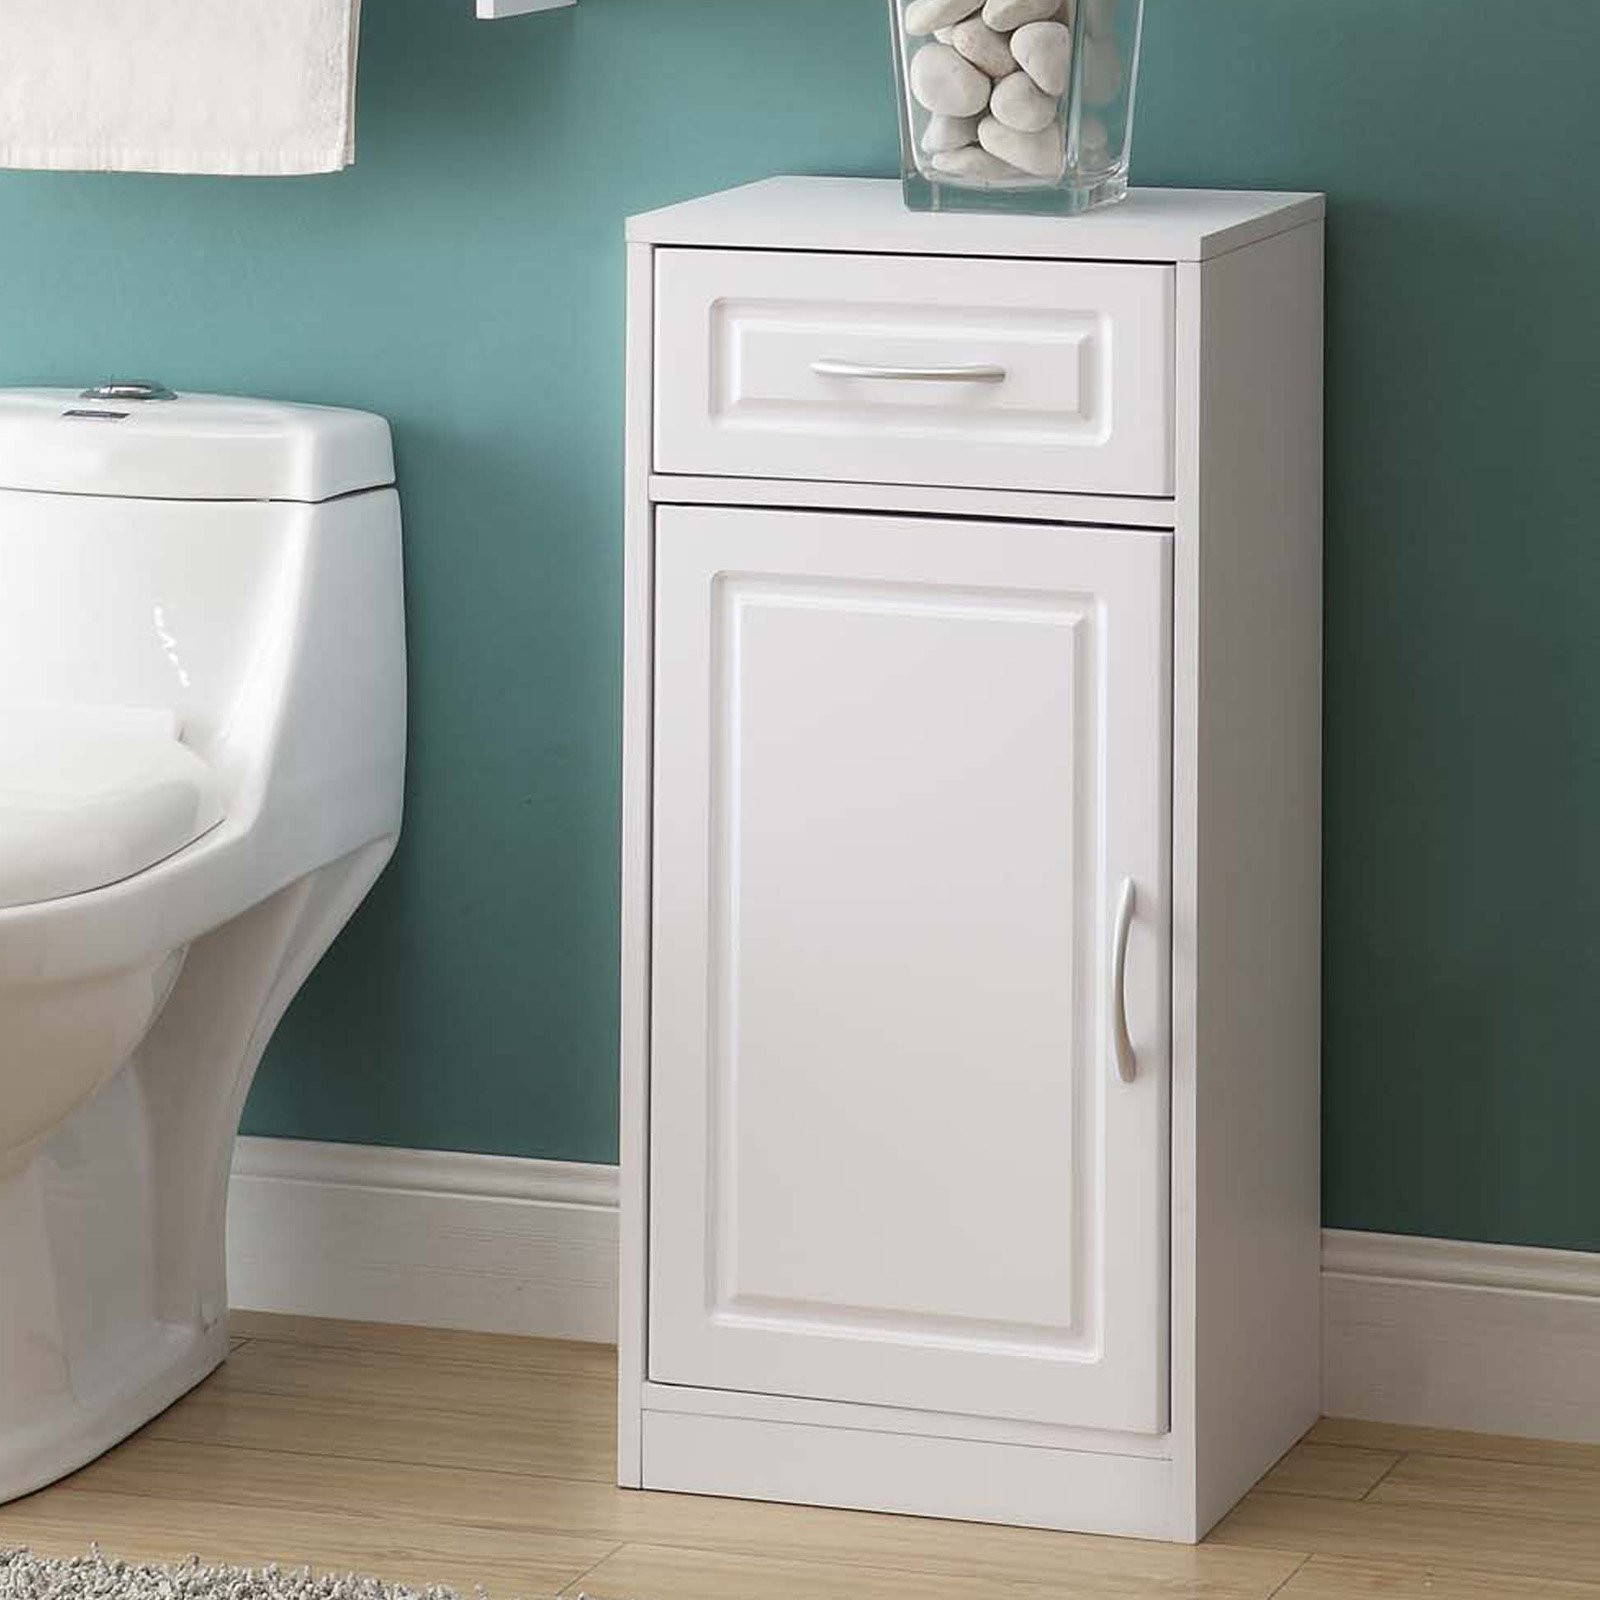 Bathroom Storage Floor Cabinet
 4D Concepts White Bathroom Base Cabinet with e Door